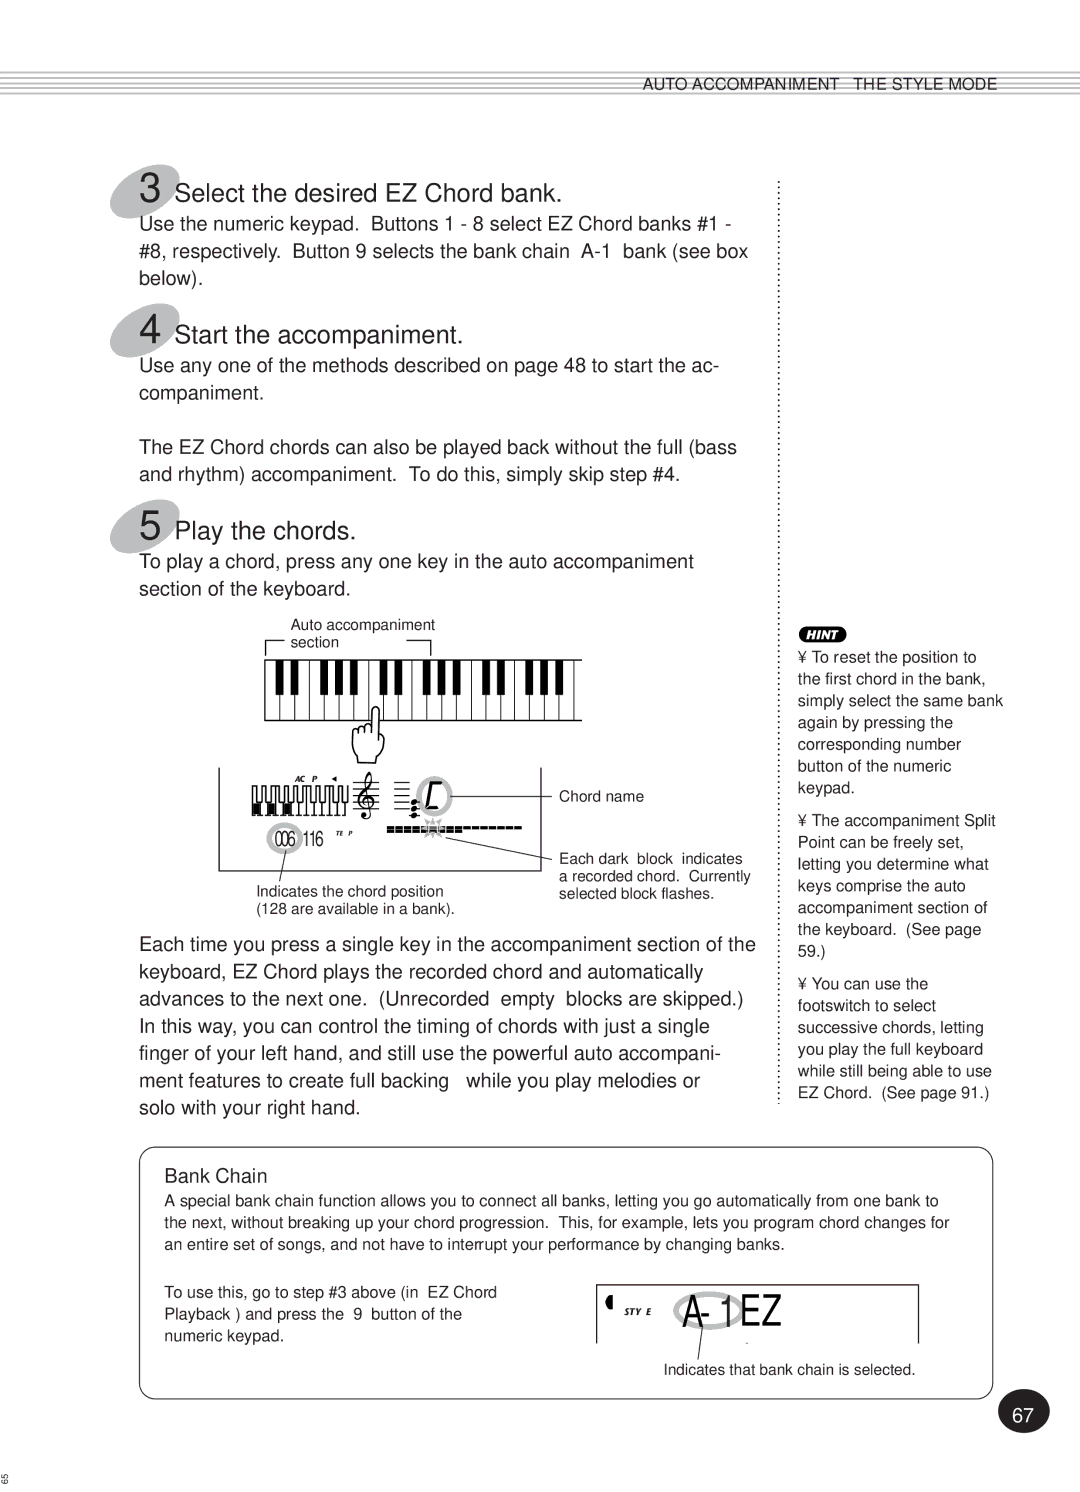 Yamaha Portatone, PSR-270 manual Select the desired EZ Chord bank, Play the chords, Bank Chain 